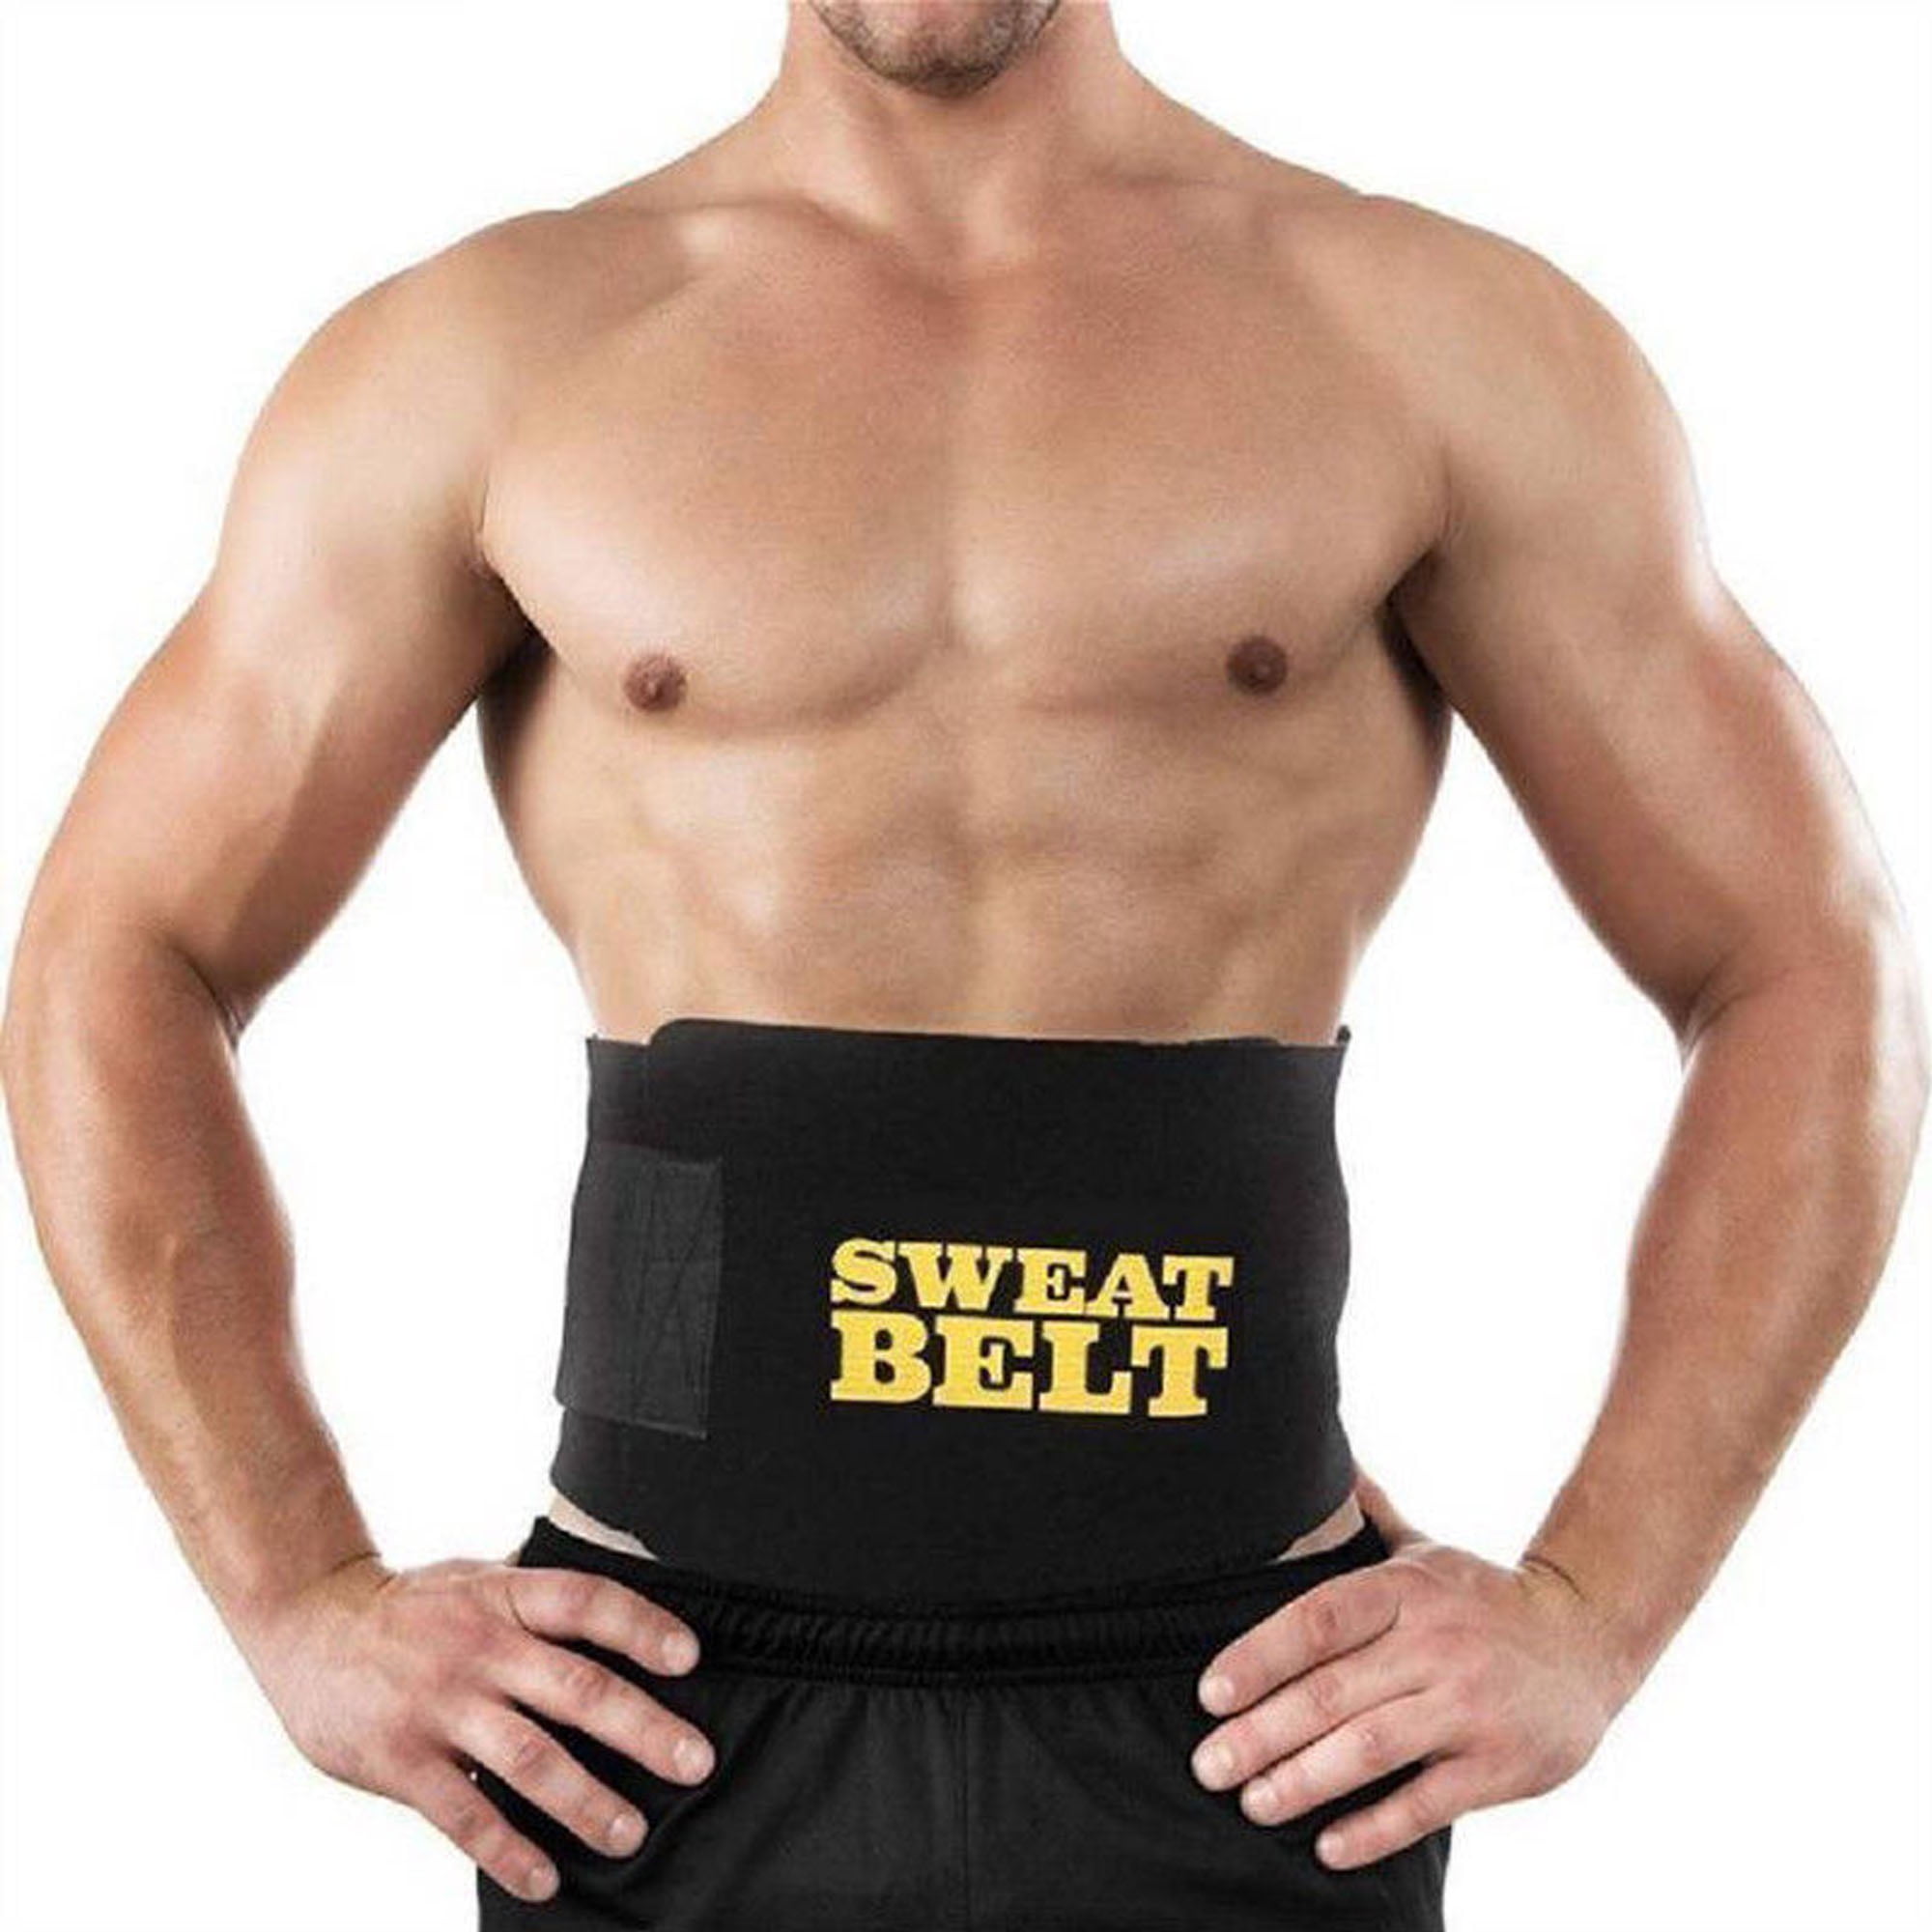 Hot Waist Tummy Trimmer Sweat Band Body Shaper Belt Wrap Fat Burn Slim Exercise 